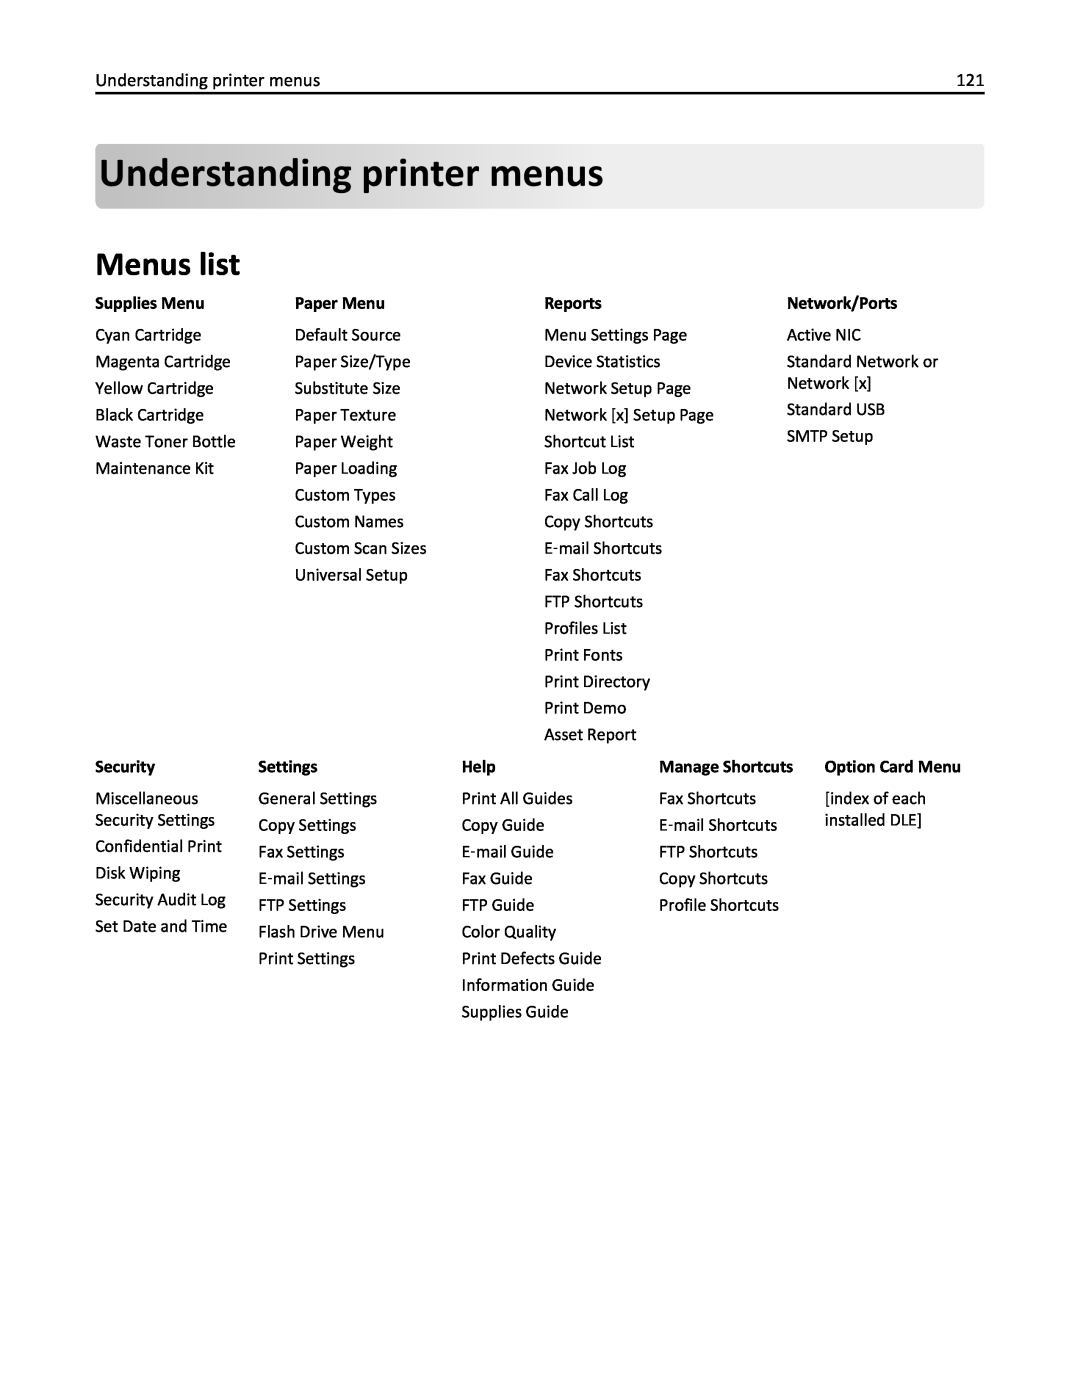 Lexmark 436 Understanding printermenus, Menus list, Supplies Menu, Paper Menu, Reports, Network/Ports, Security, Settings 